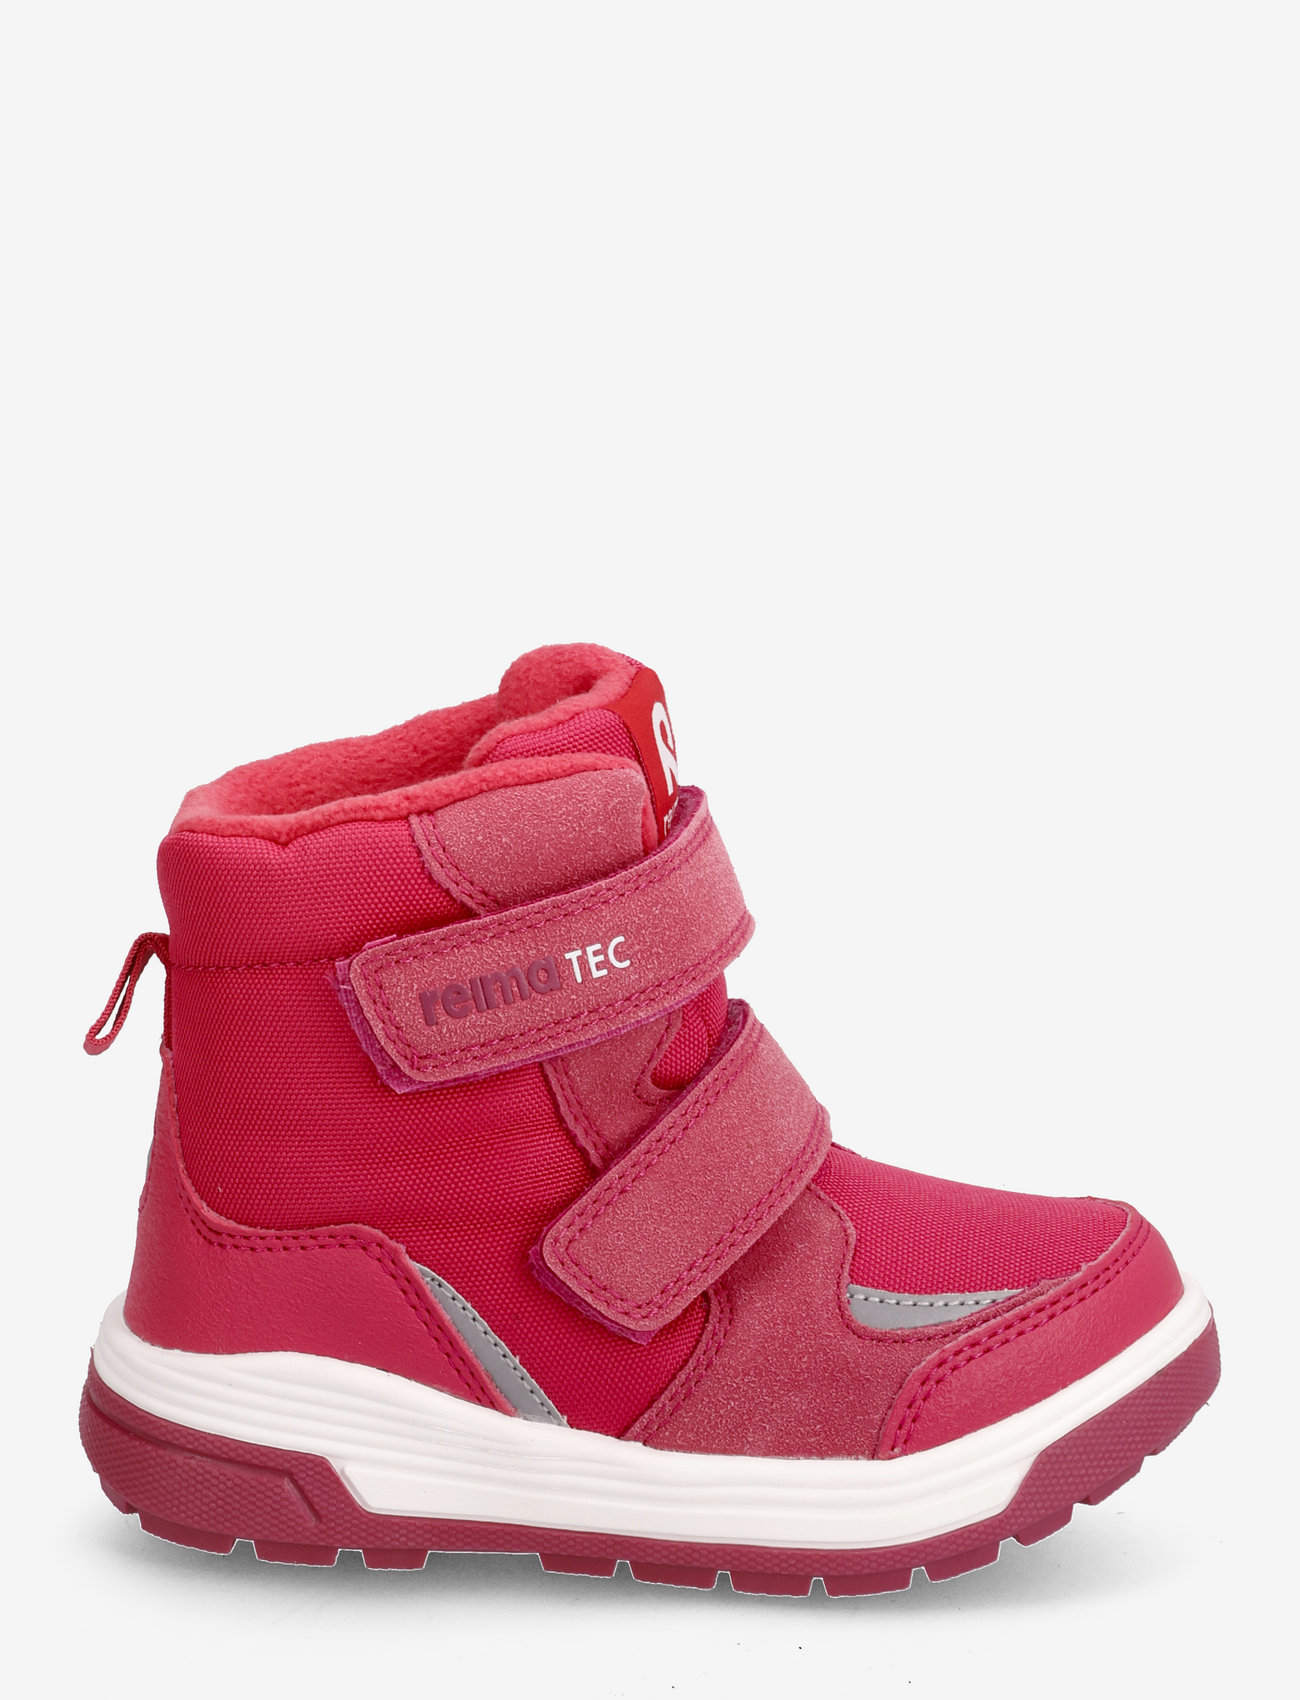 Reima - Reimatec shoes, Qing - kids - azalea pink - 1